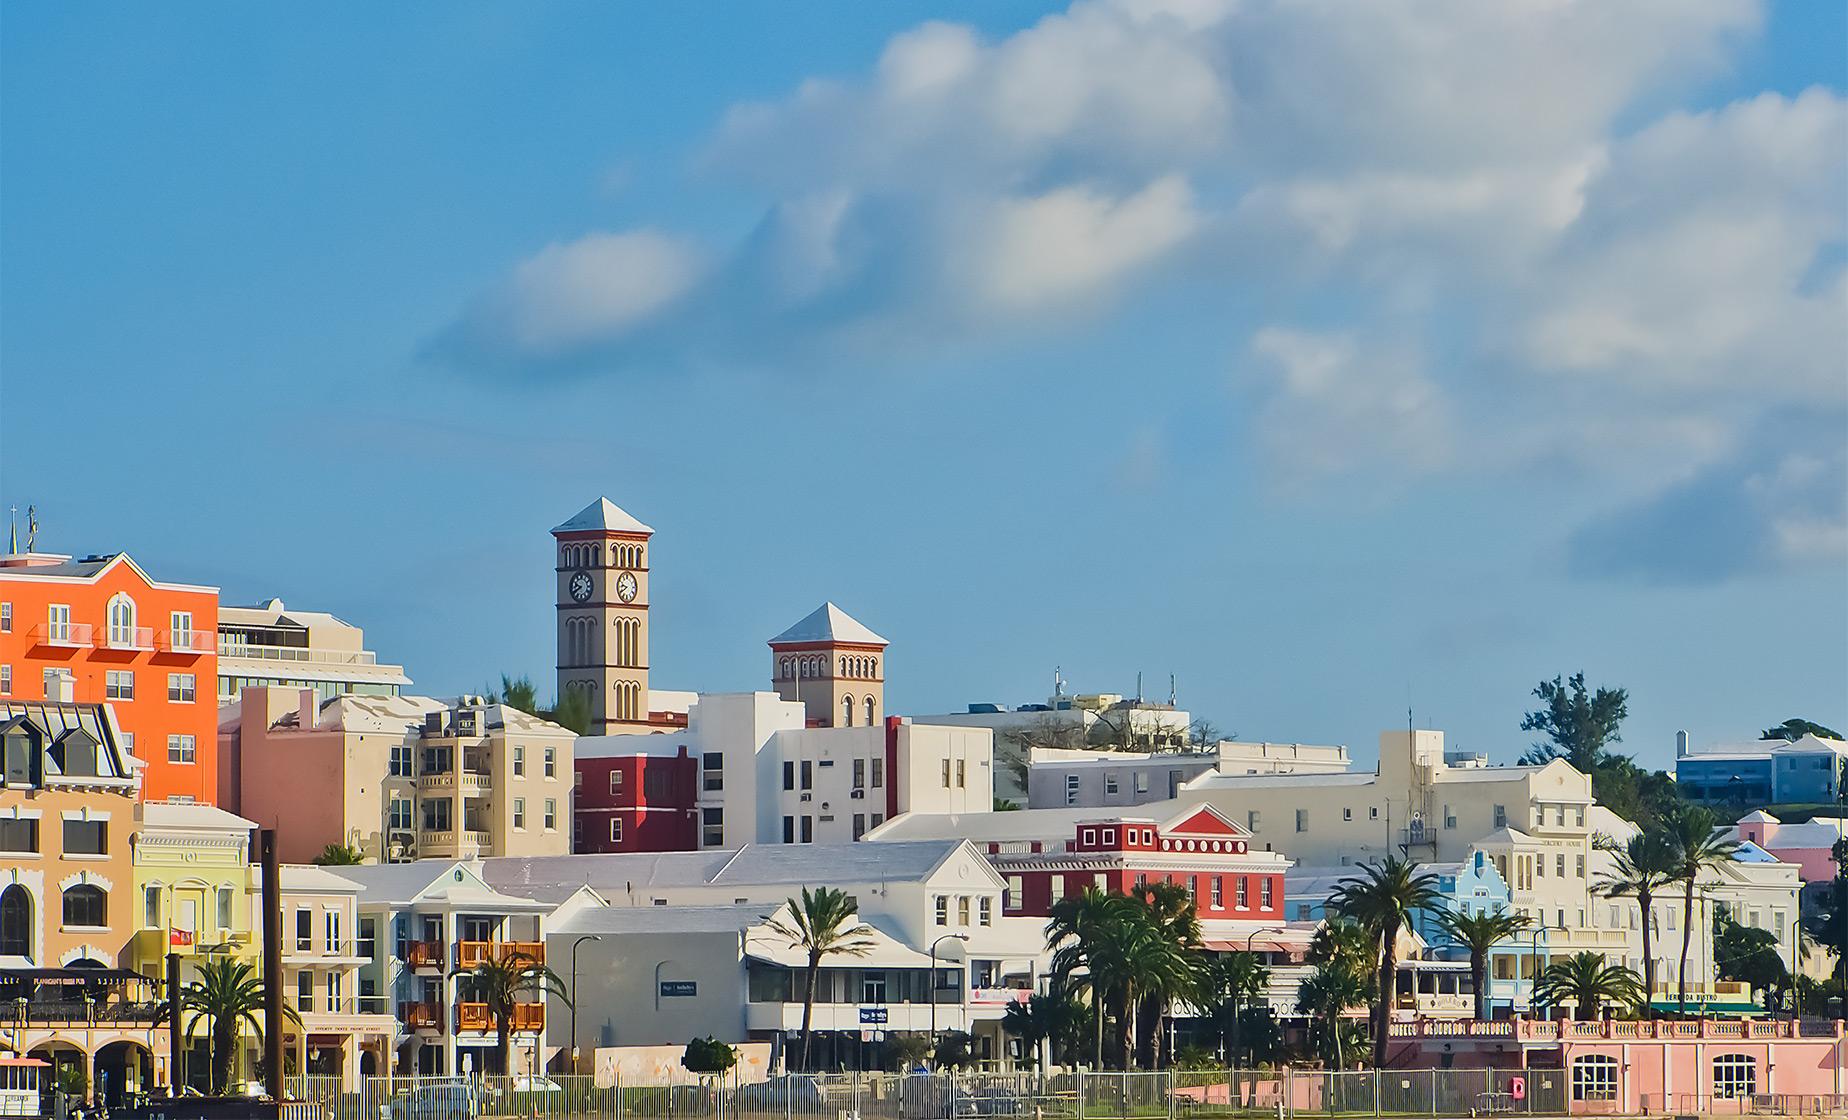 Bermuda Sights, Shopping and Sand